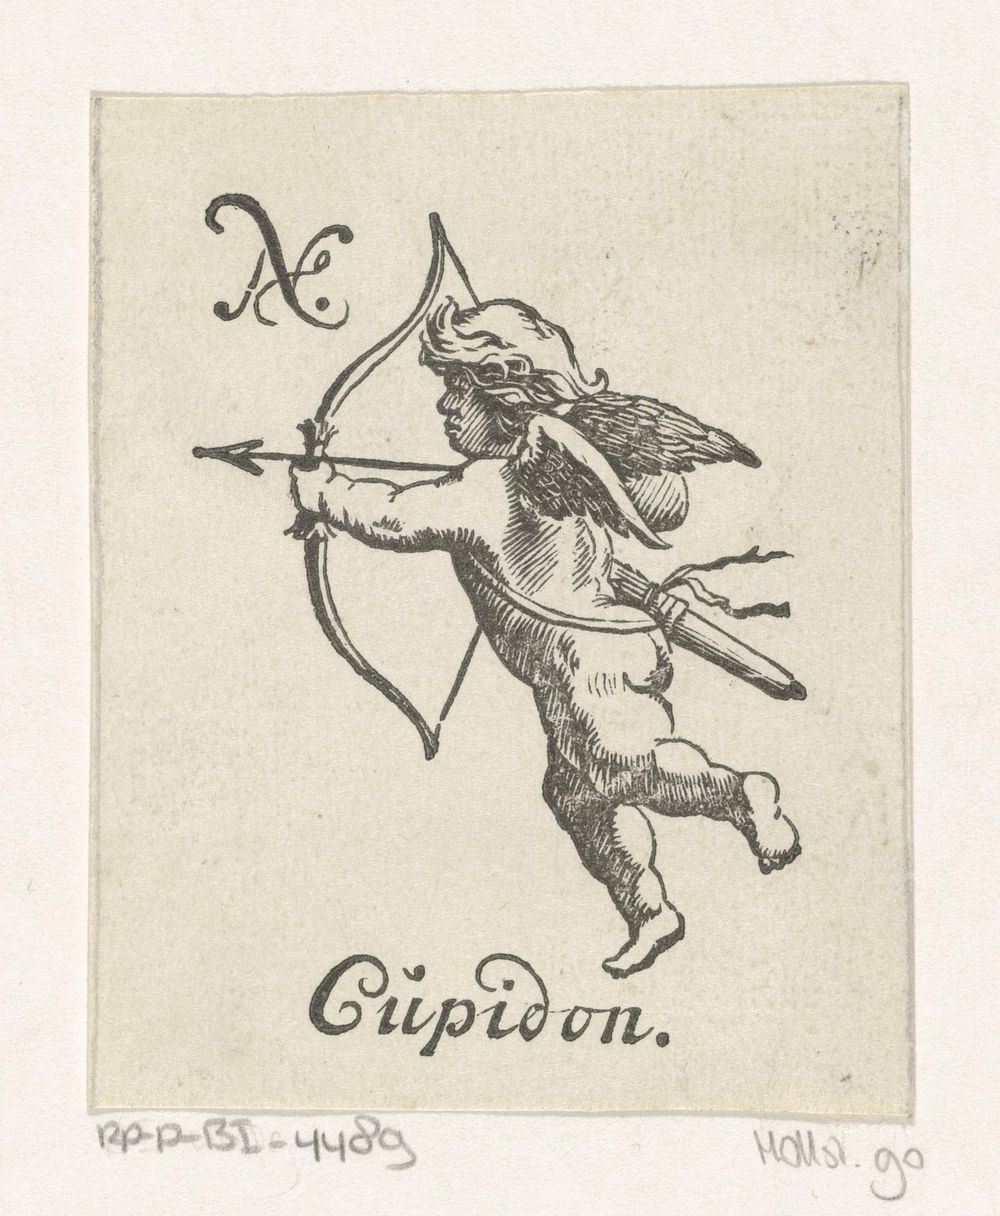 Handelsetiket met Cupido die een pijl en boog vasthoudt (c. 1681 - 1740) by Isaac Vincentsz van der Vinne